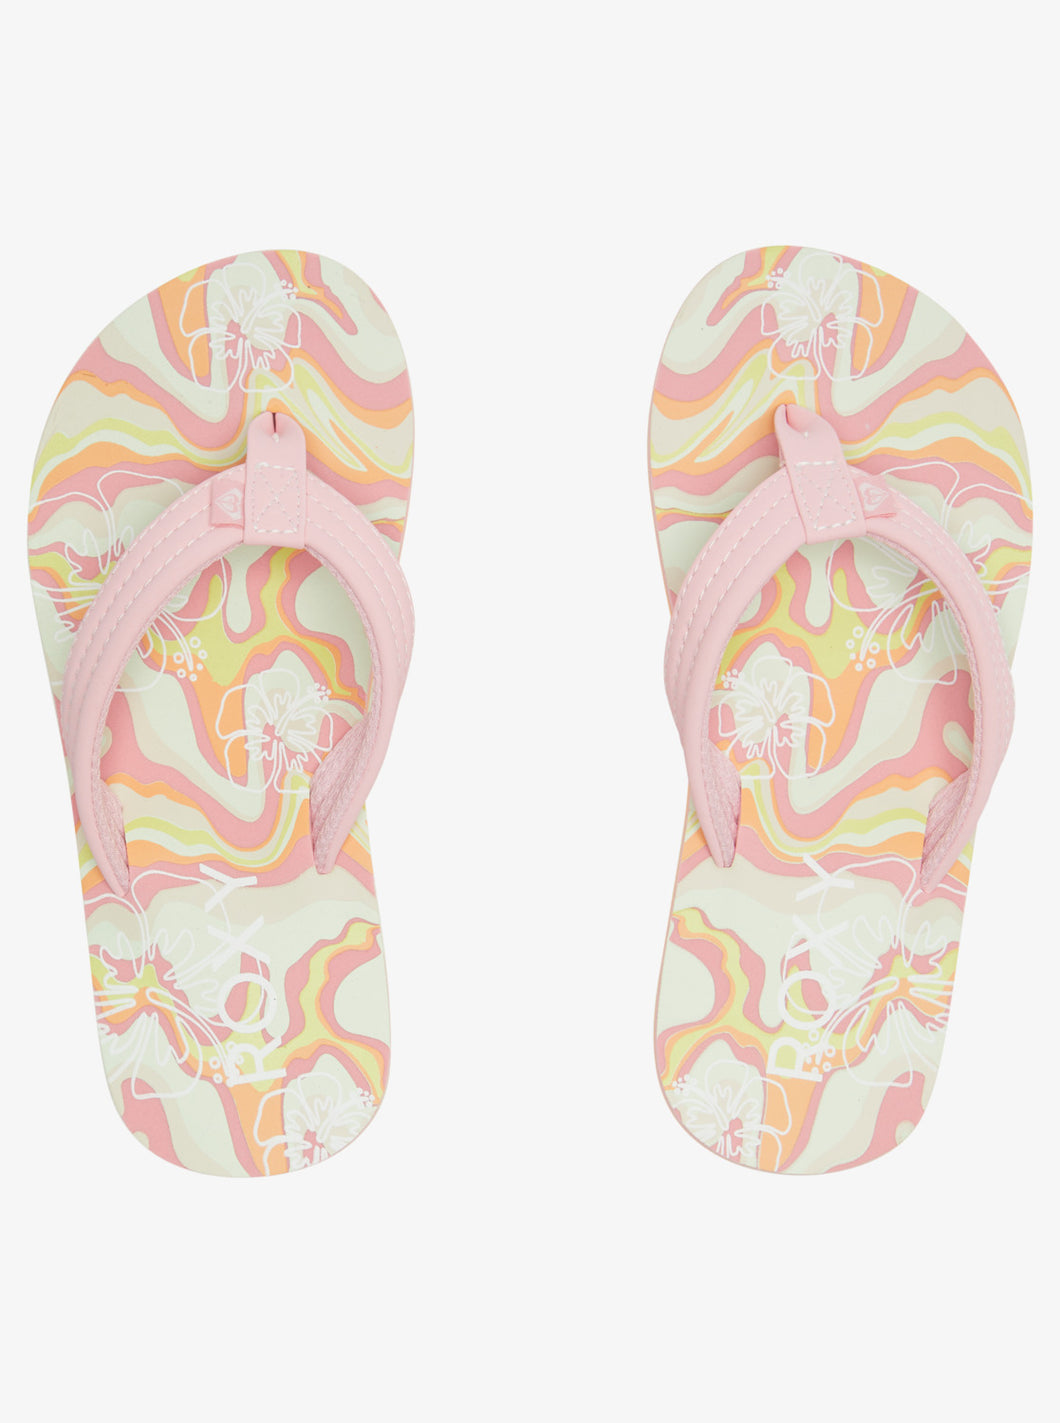 Roxy Girl “Vista Loreto” Retro Swirl Floral Flip Flops : Size 11 to 3